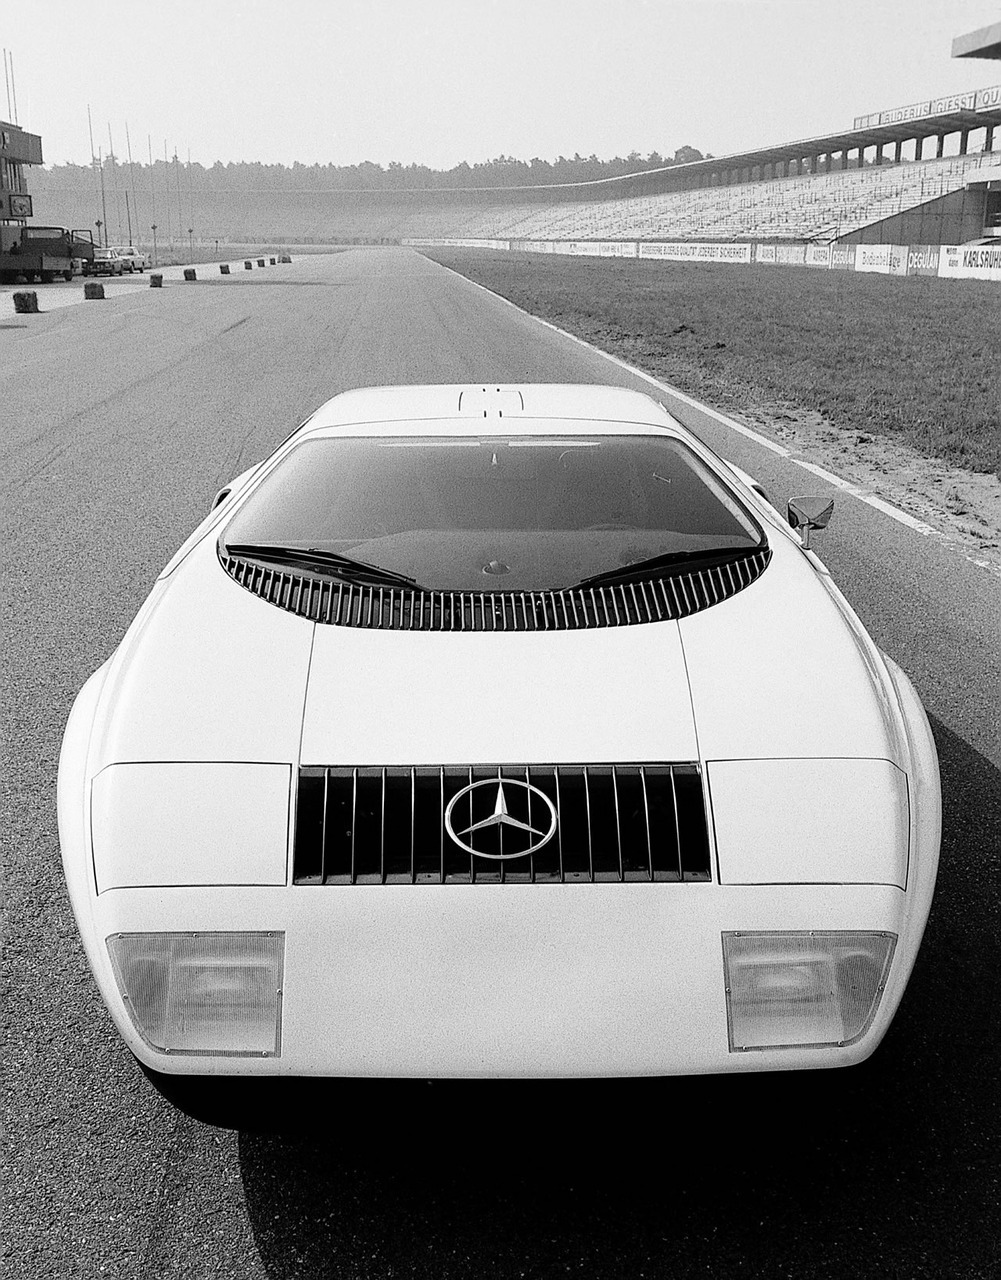 Mercedes Benz C 111 on the Hockenheim race track, 1969via: emercedesbenz